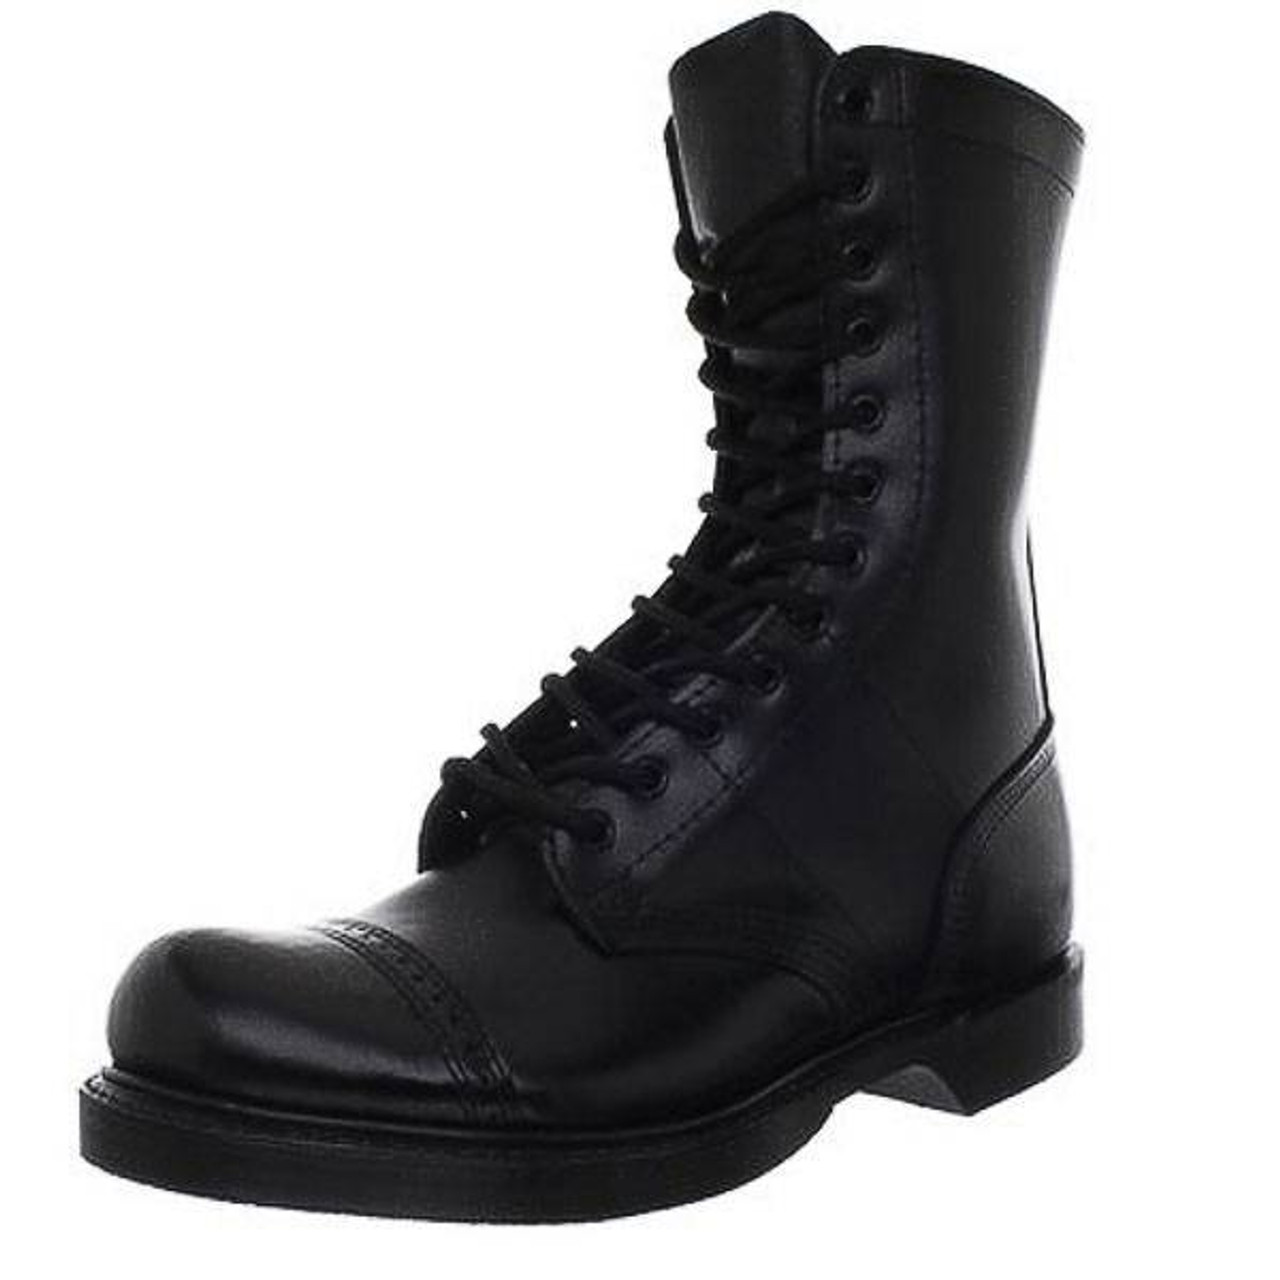 corcoran marauder boots